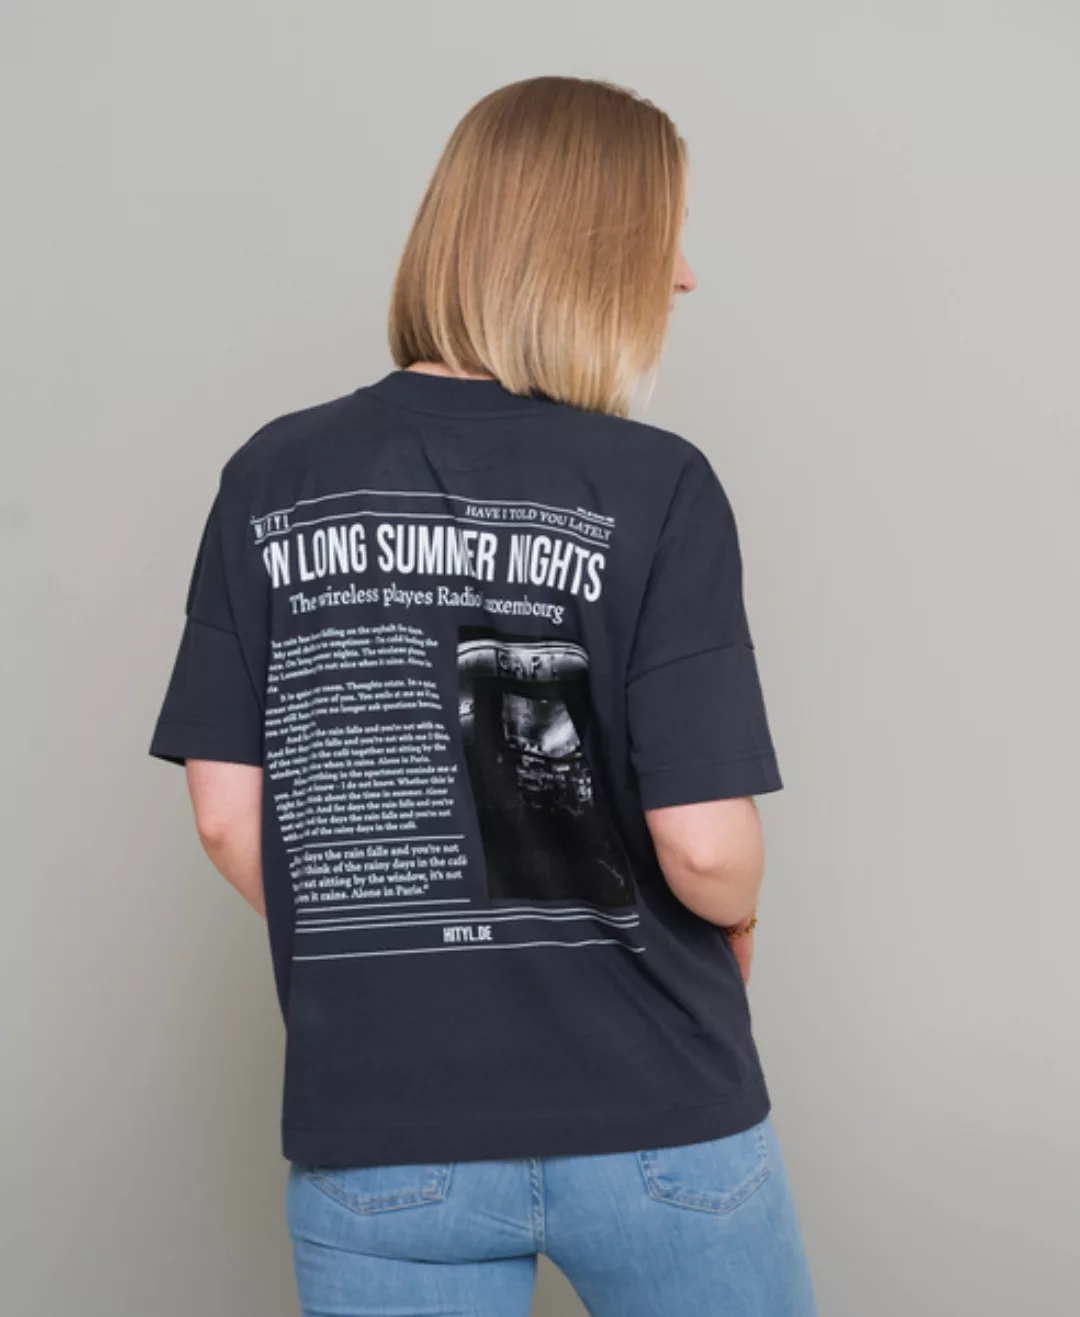 Oversize Shirt - "On Long Summer Nights" günstig online kaufen